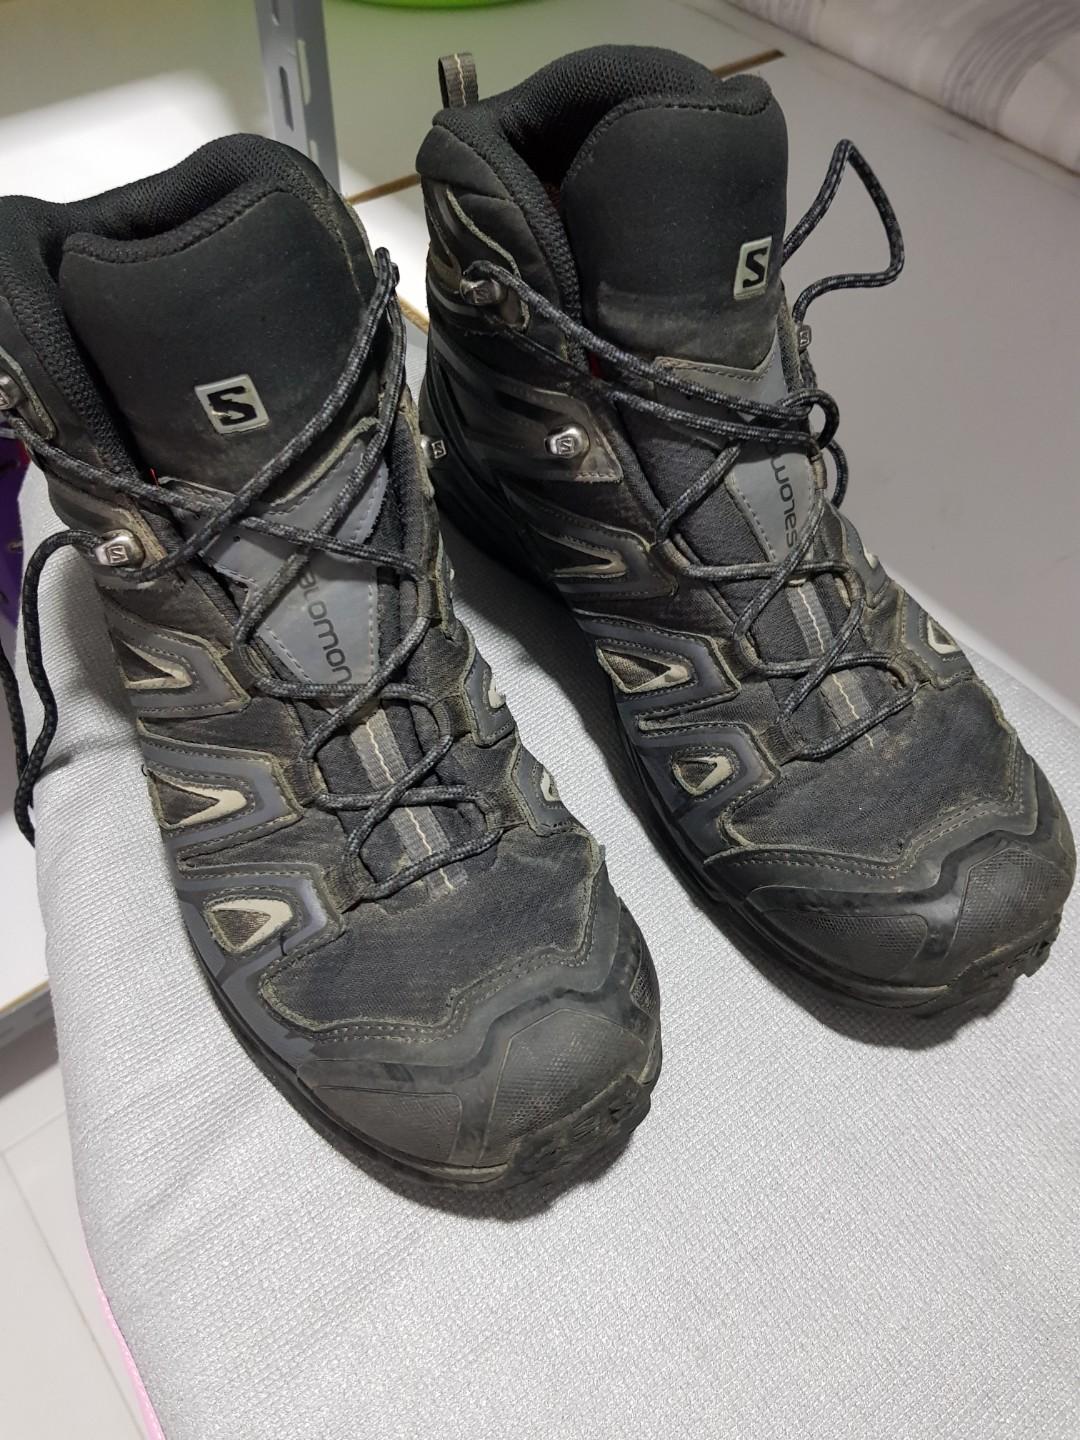 salomon men's x ultra 3 mid gtx hiking boot